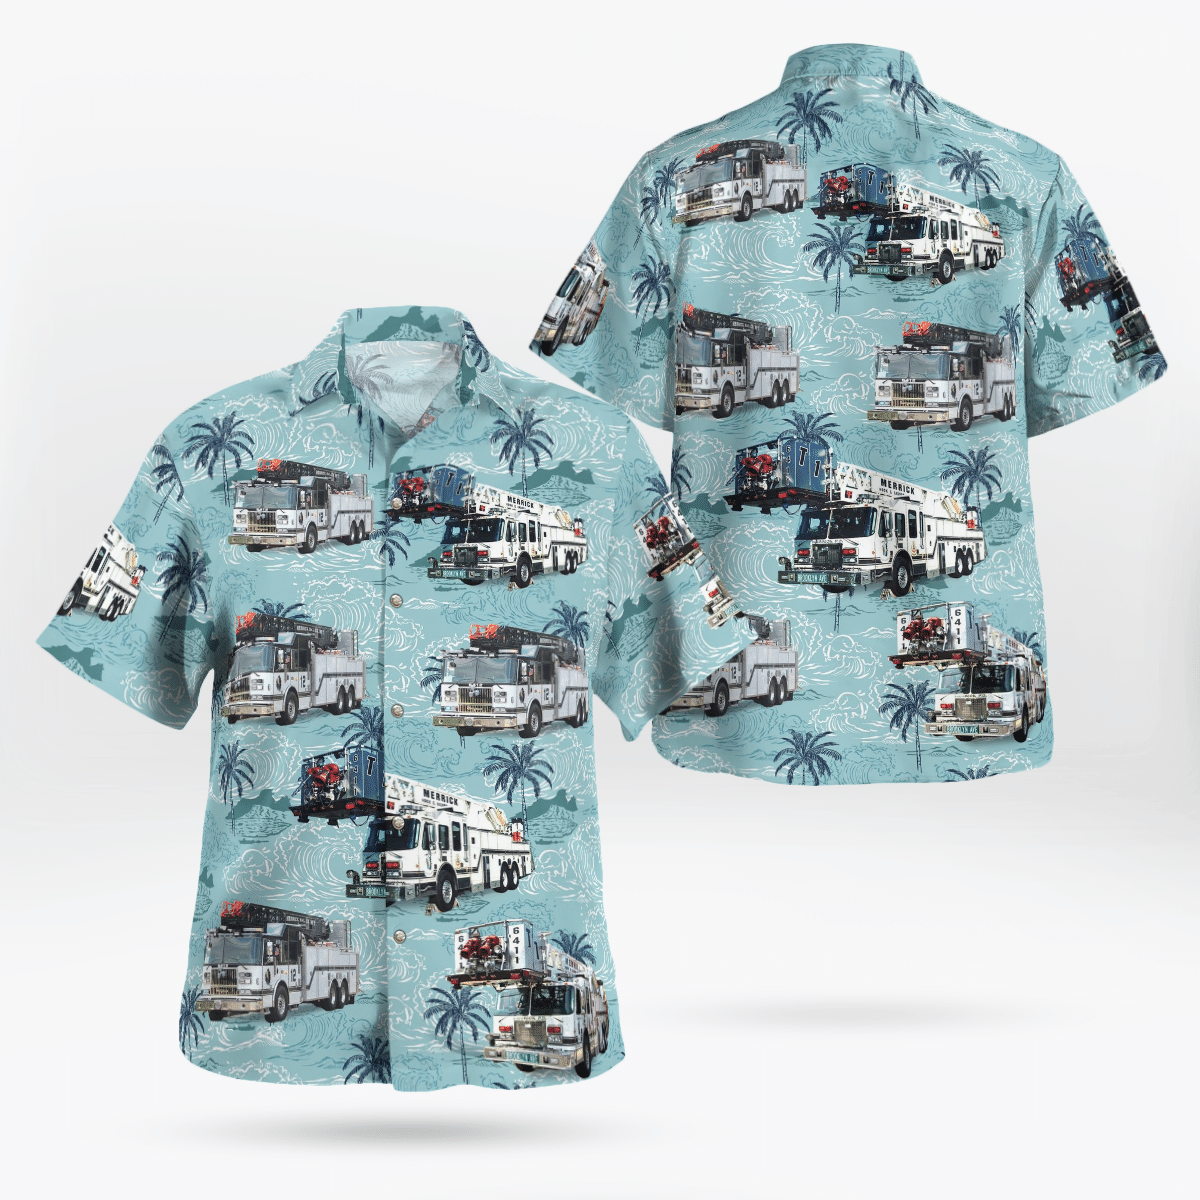 Why don't you order Hot Hawaiian Shirt today? 181